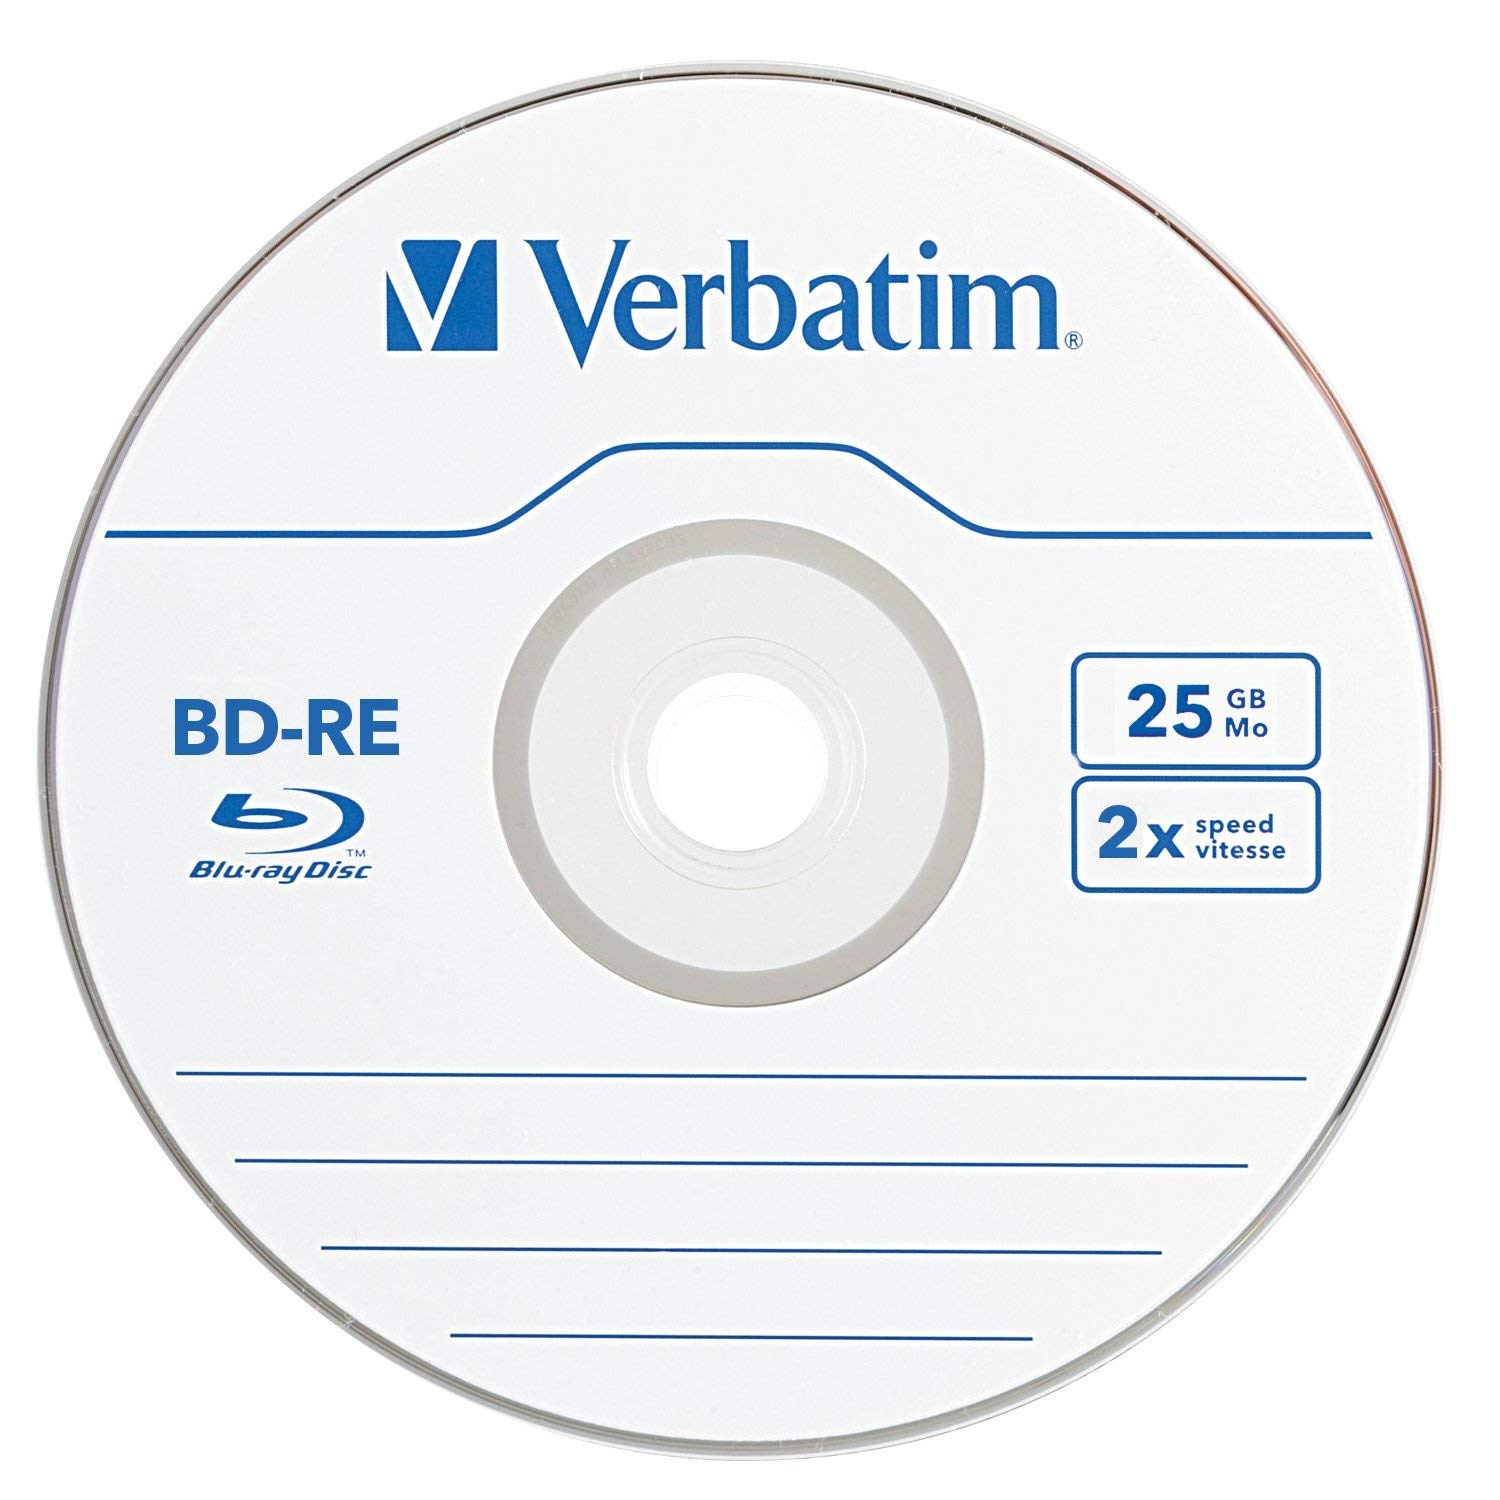 Verbatim BD-RE 25GB 2X with Branded Surface - 5pk Jewel Case